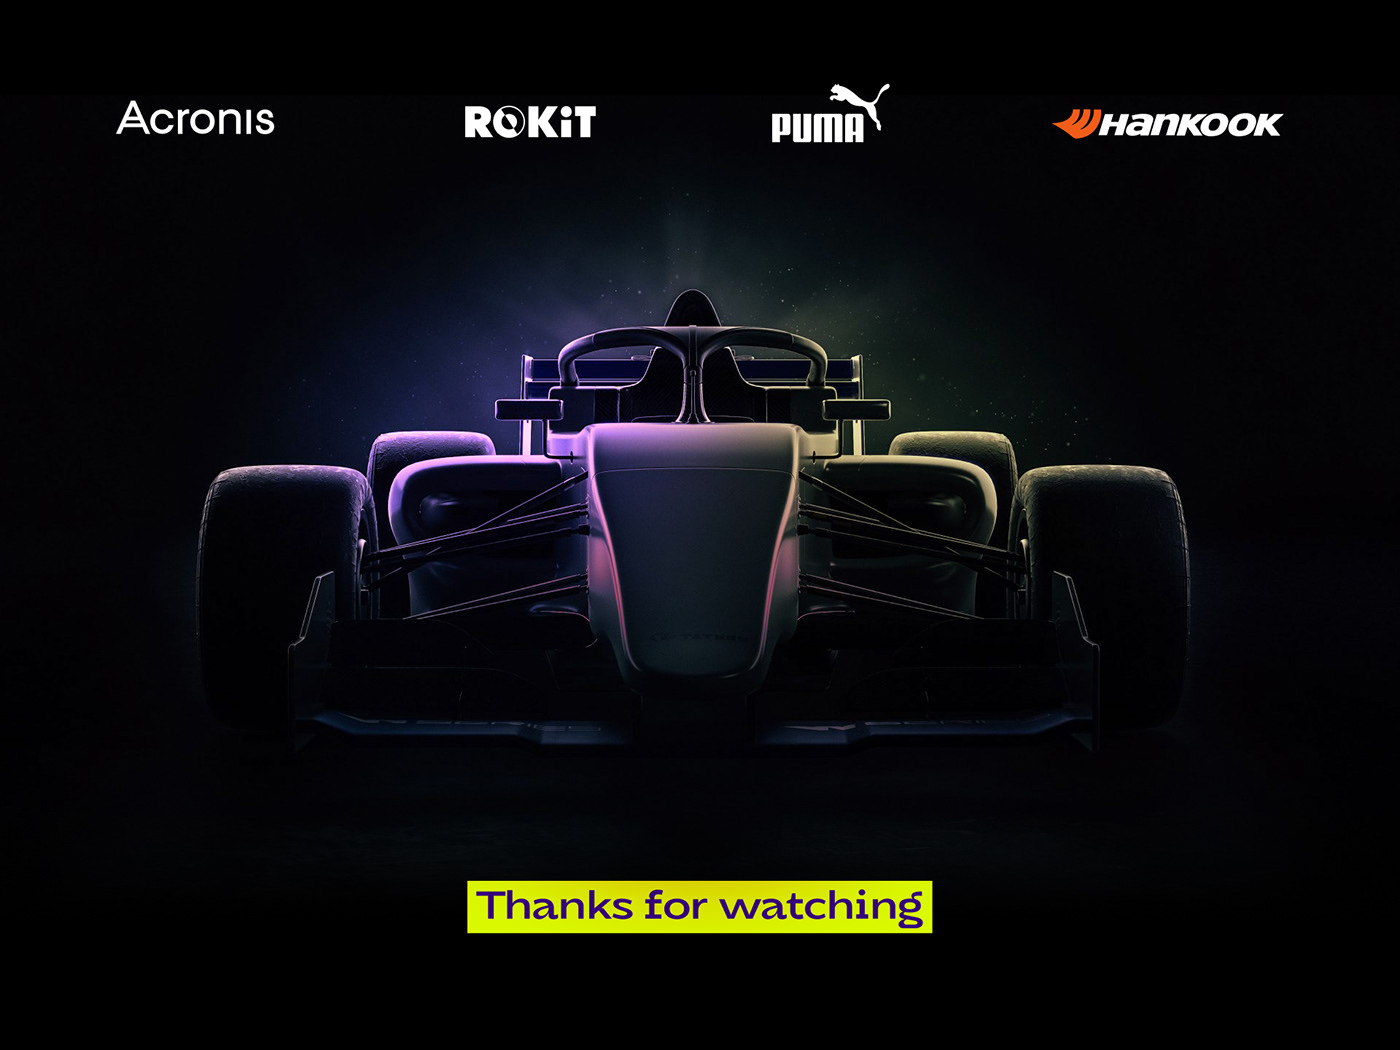 app design Formula 1 Motorsport Racing rethinkracing UI/UX UX design wseries Auto product design 